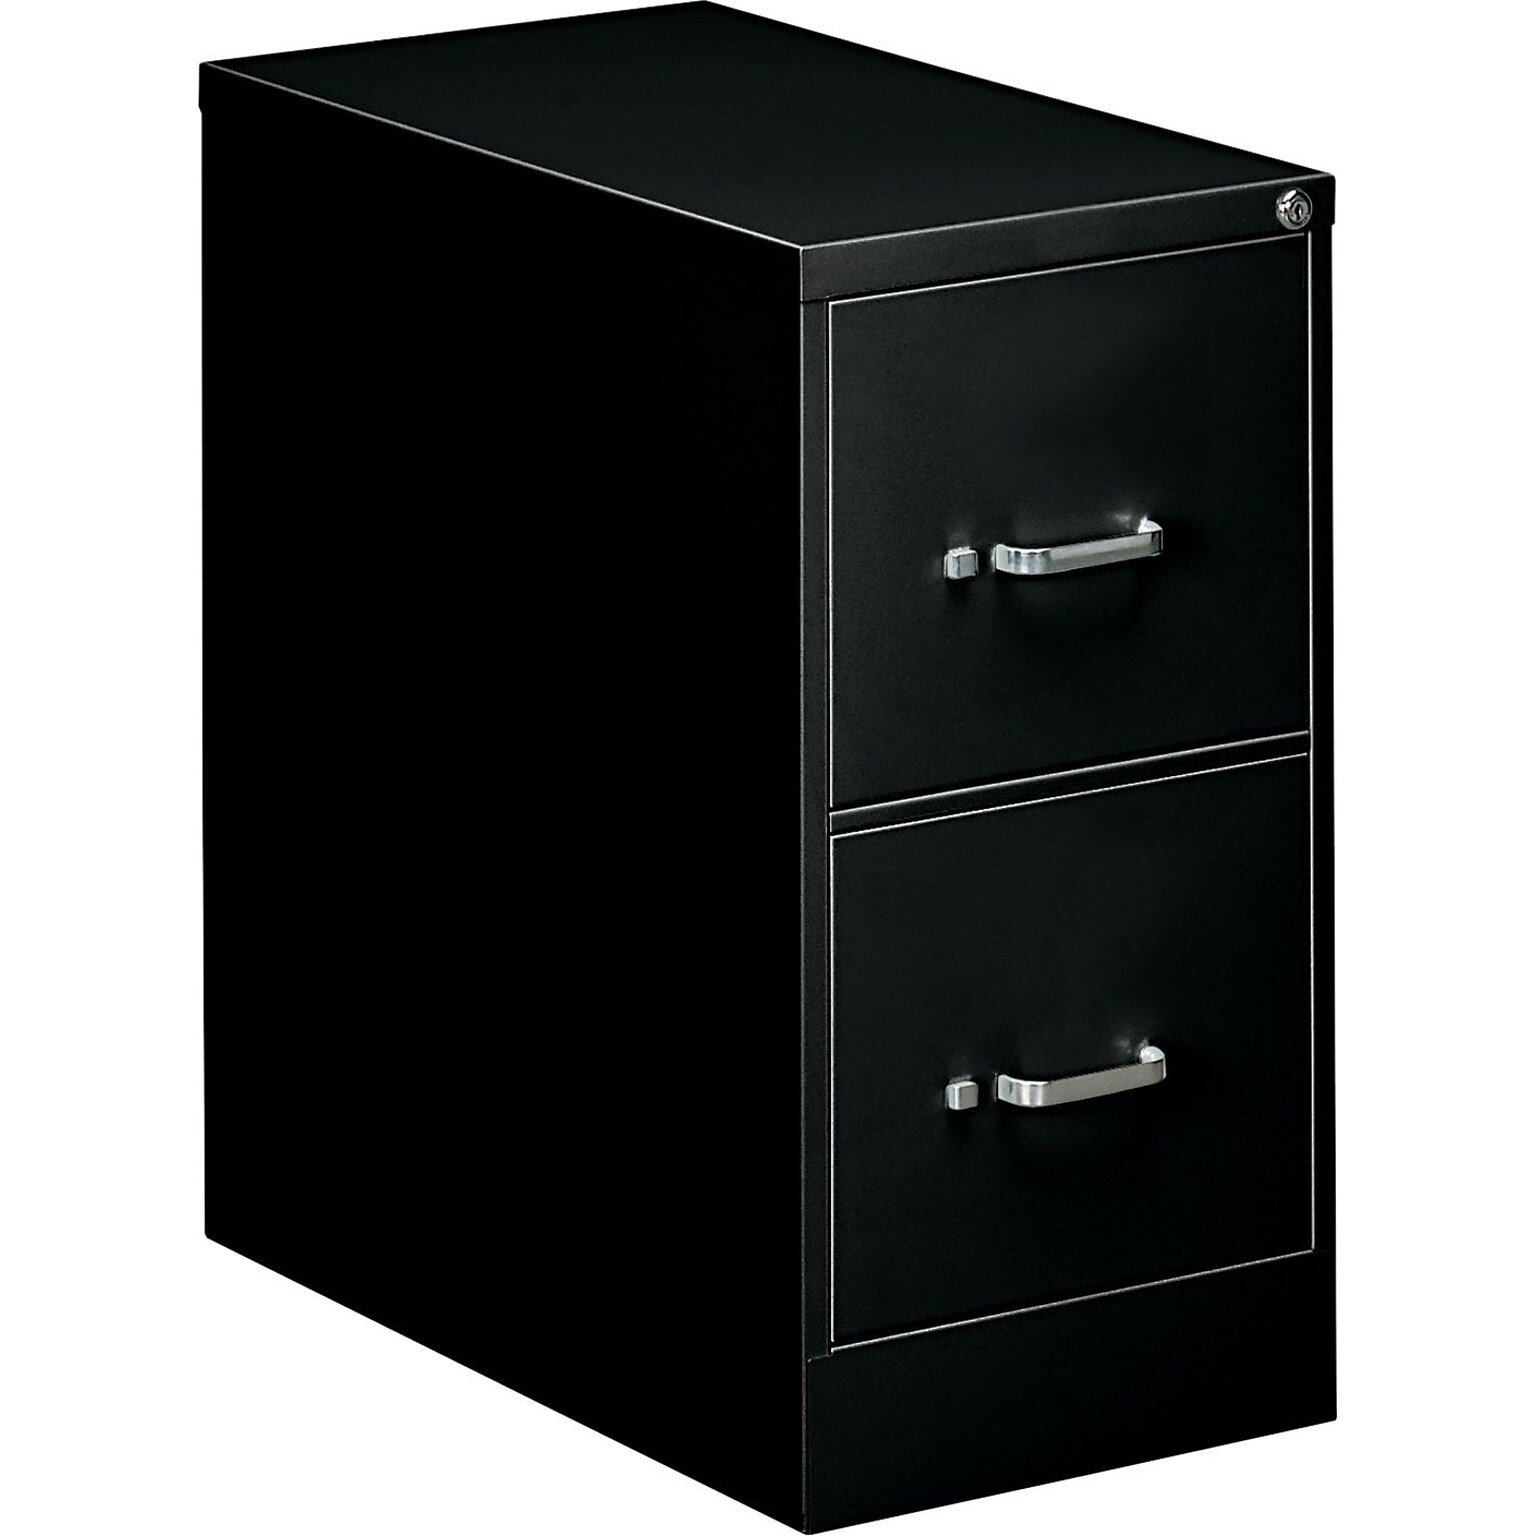 OIF Economy 2-Drawer Vertical File Cabinet, Letter Size, Lockable, 29H x 15W x 26.5D, Black (EFS21109)